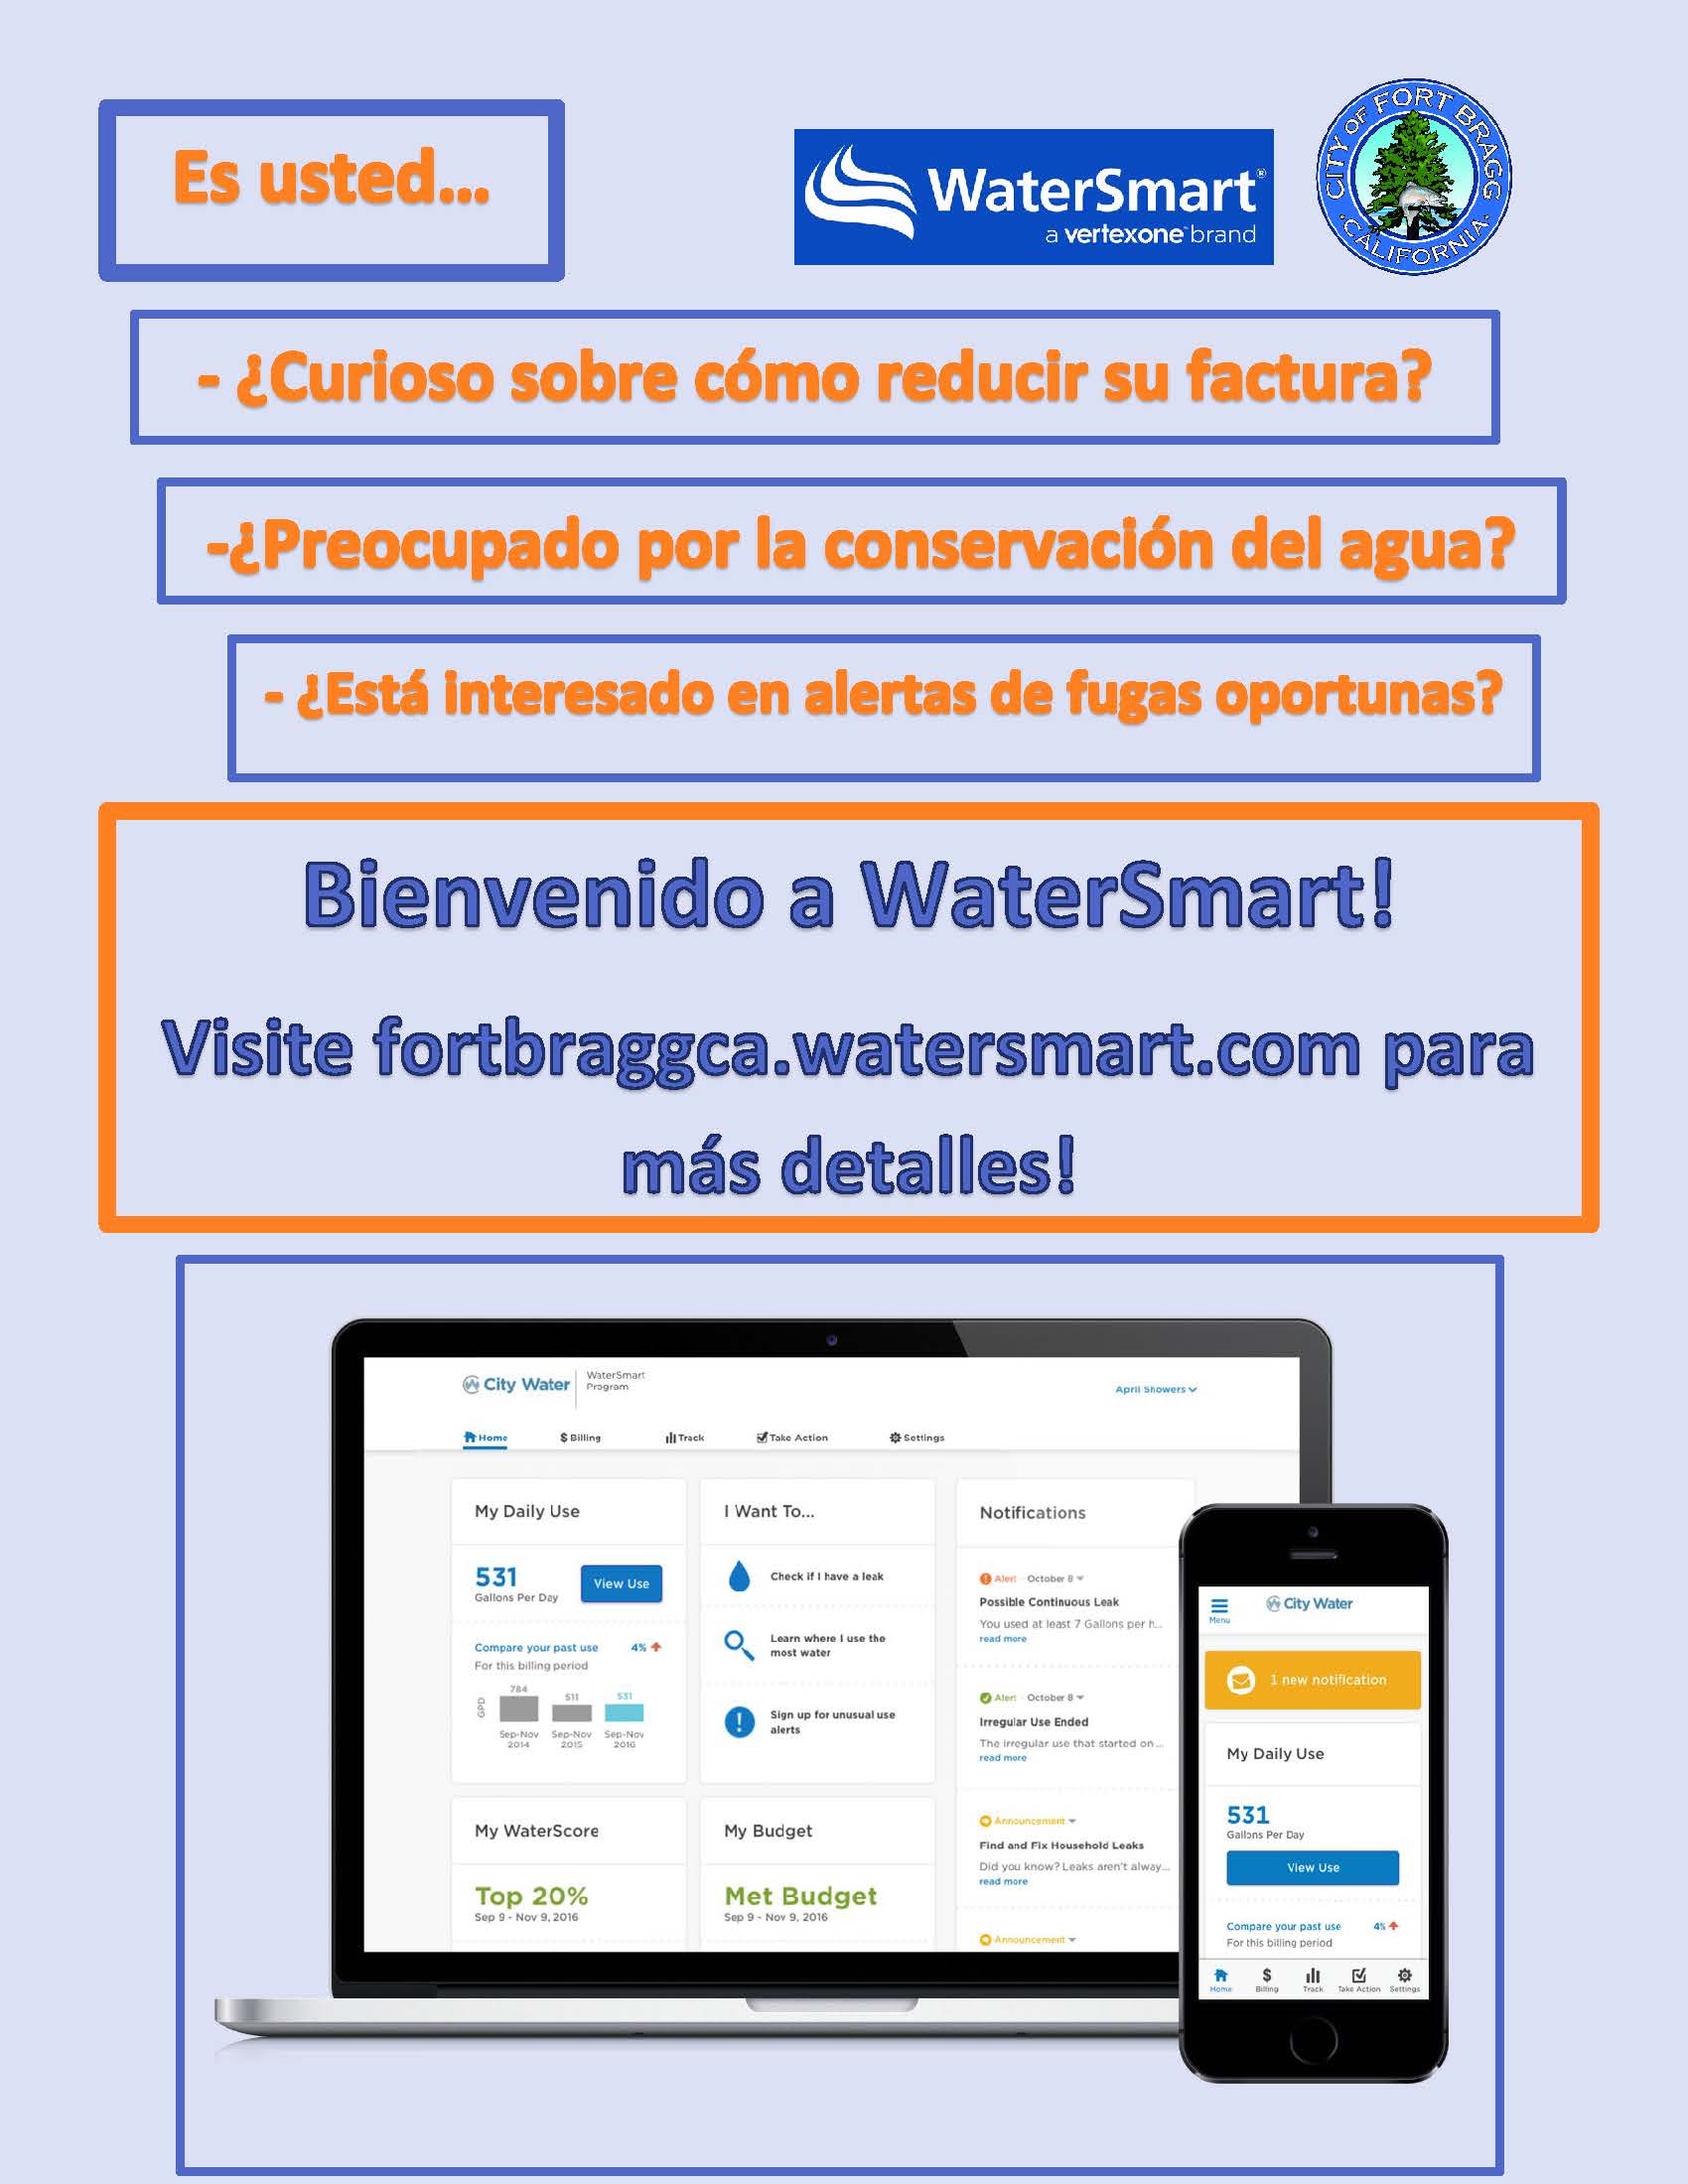 Welcome to Watersmart flyer- Spanish